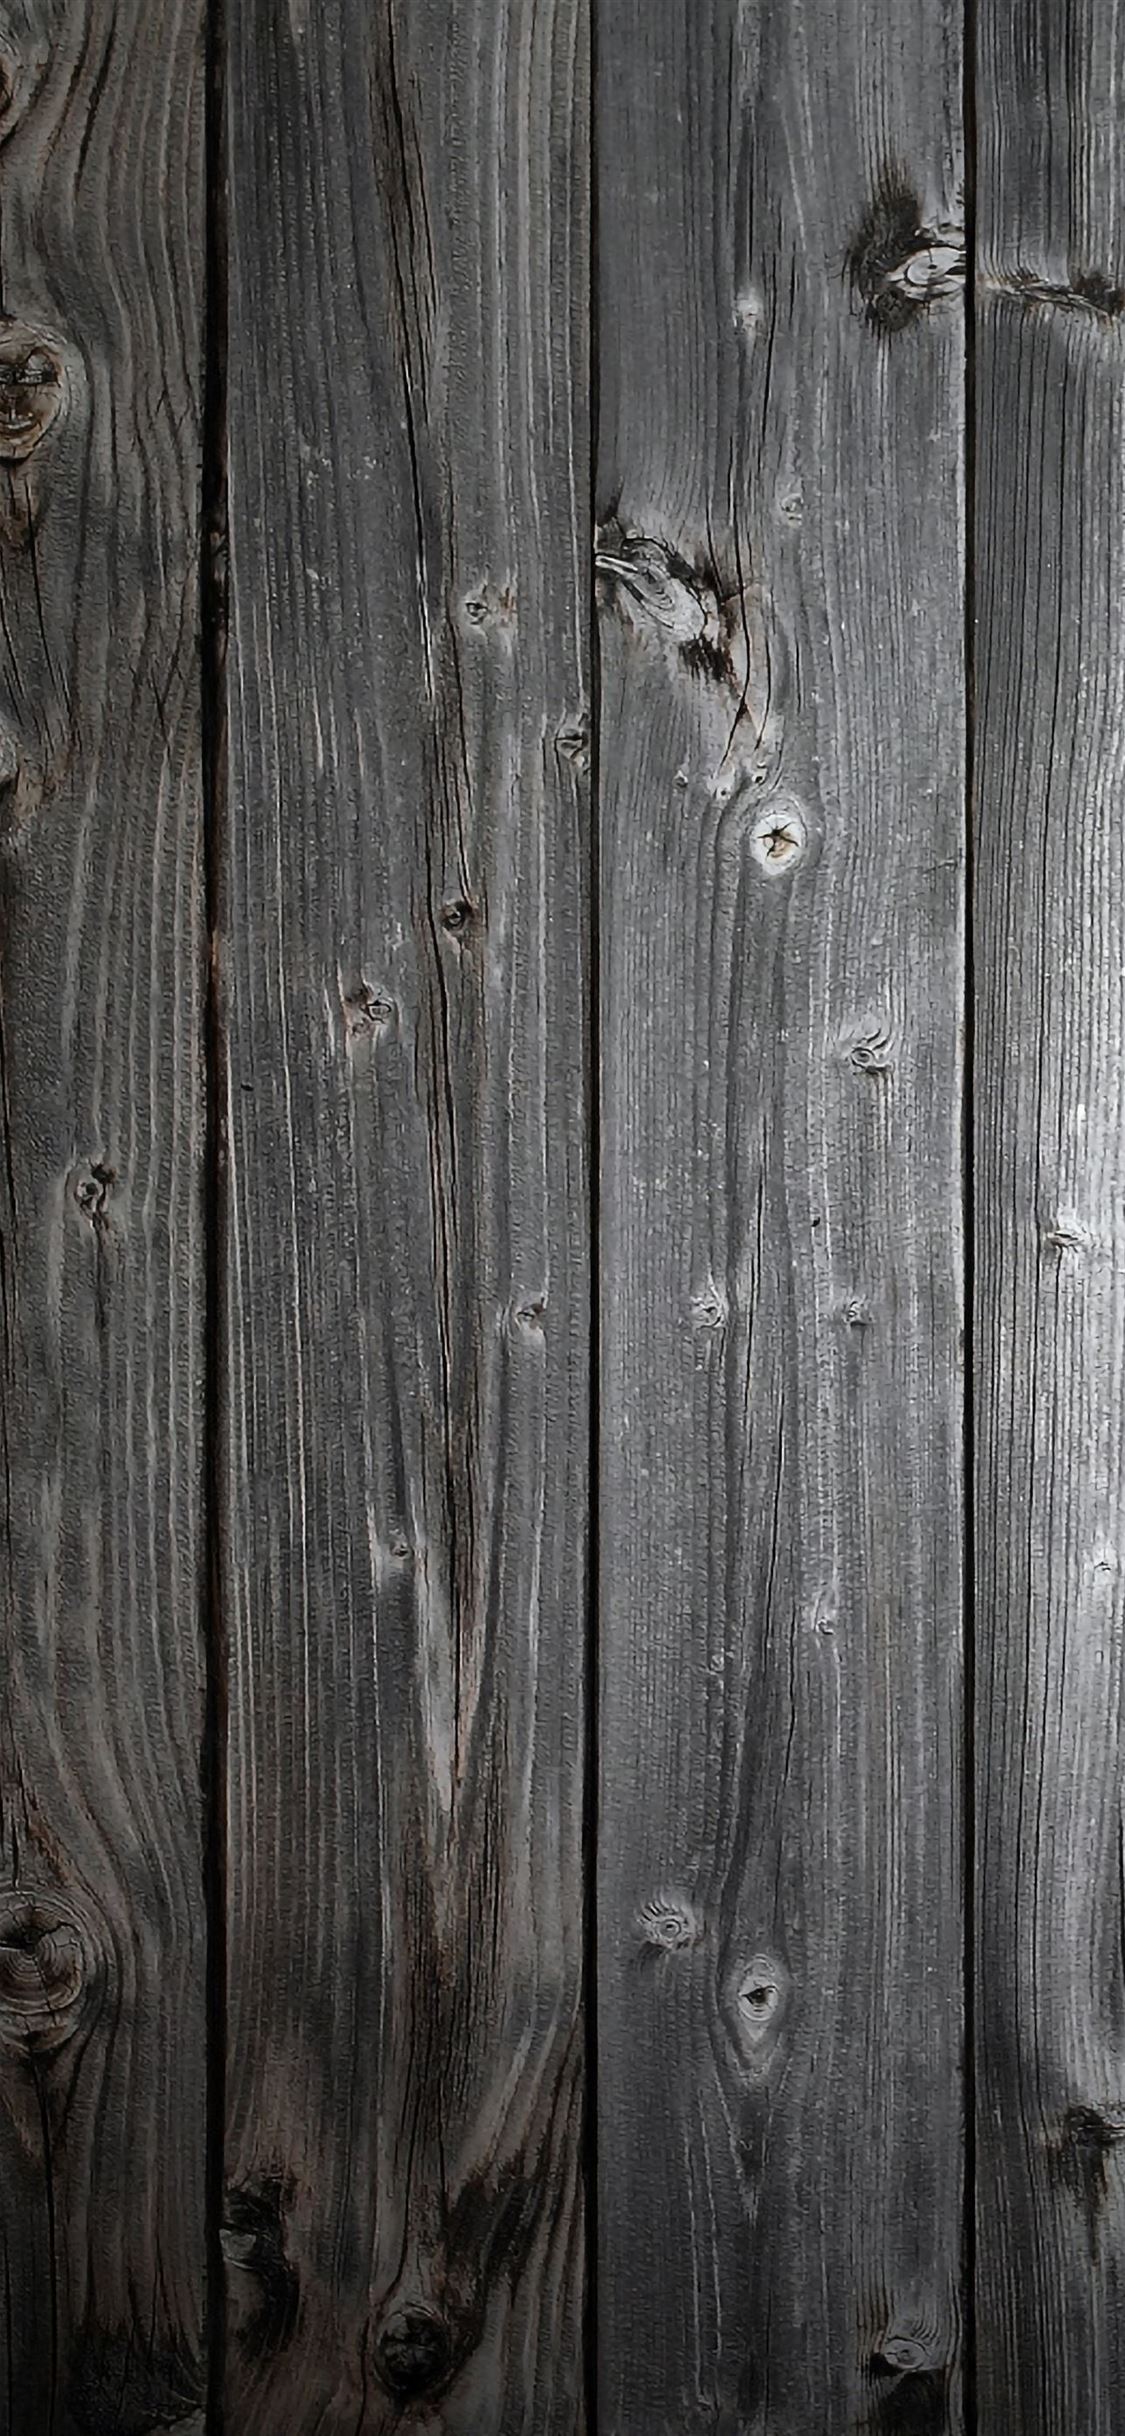 Wood Wall 3 iPhone wallpaper 